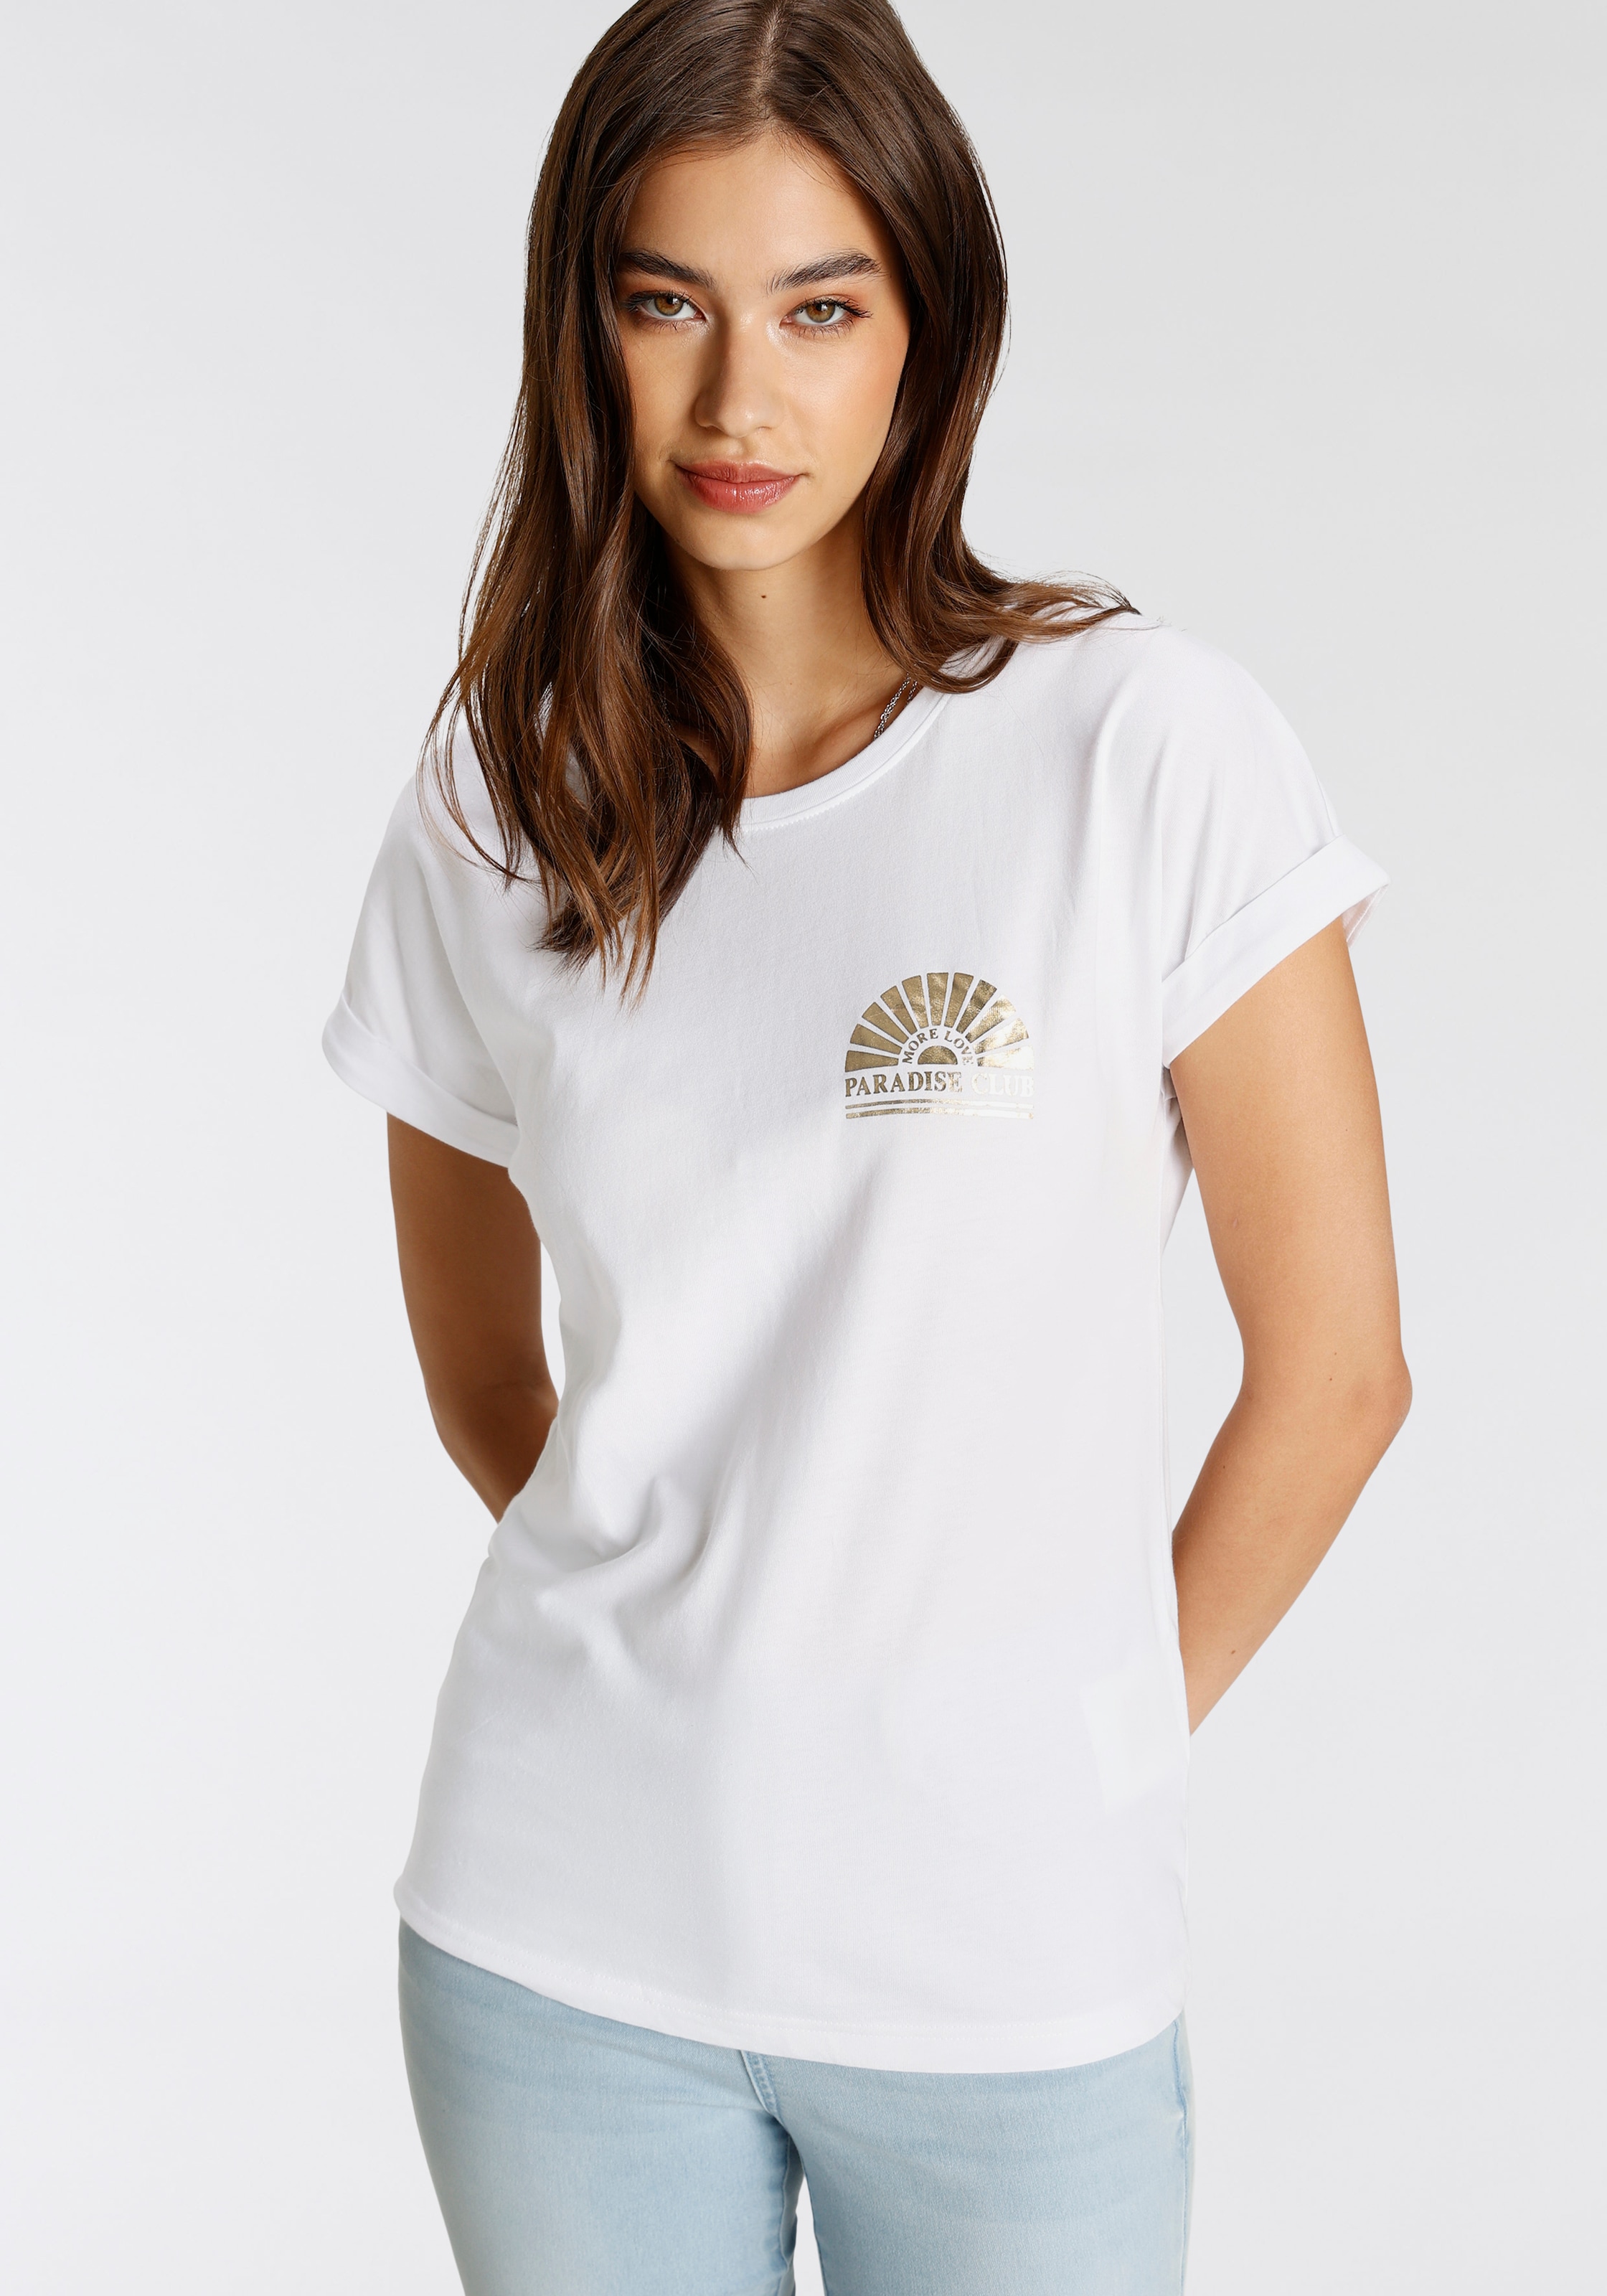 T-Shirt, Mit Elegantem Folienprint in Goldfarben - NEUE KOLLEKTION